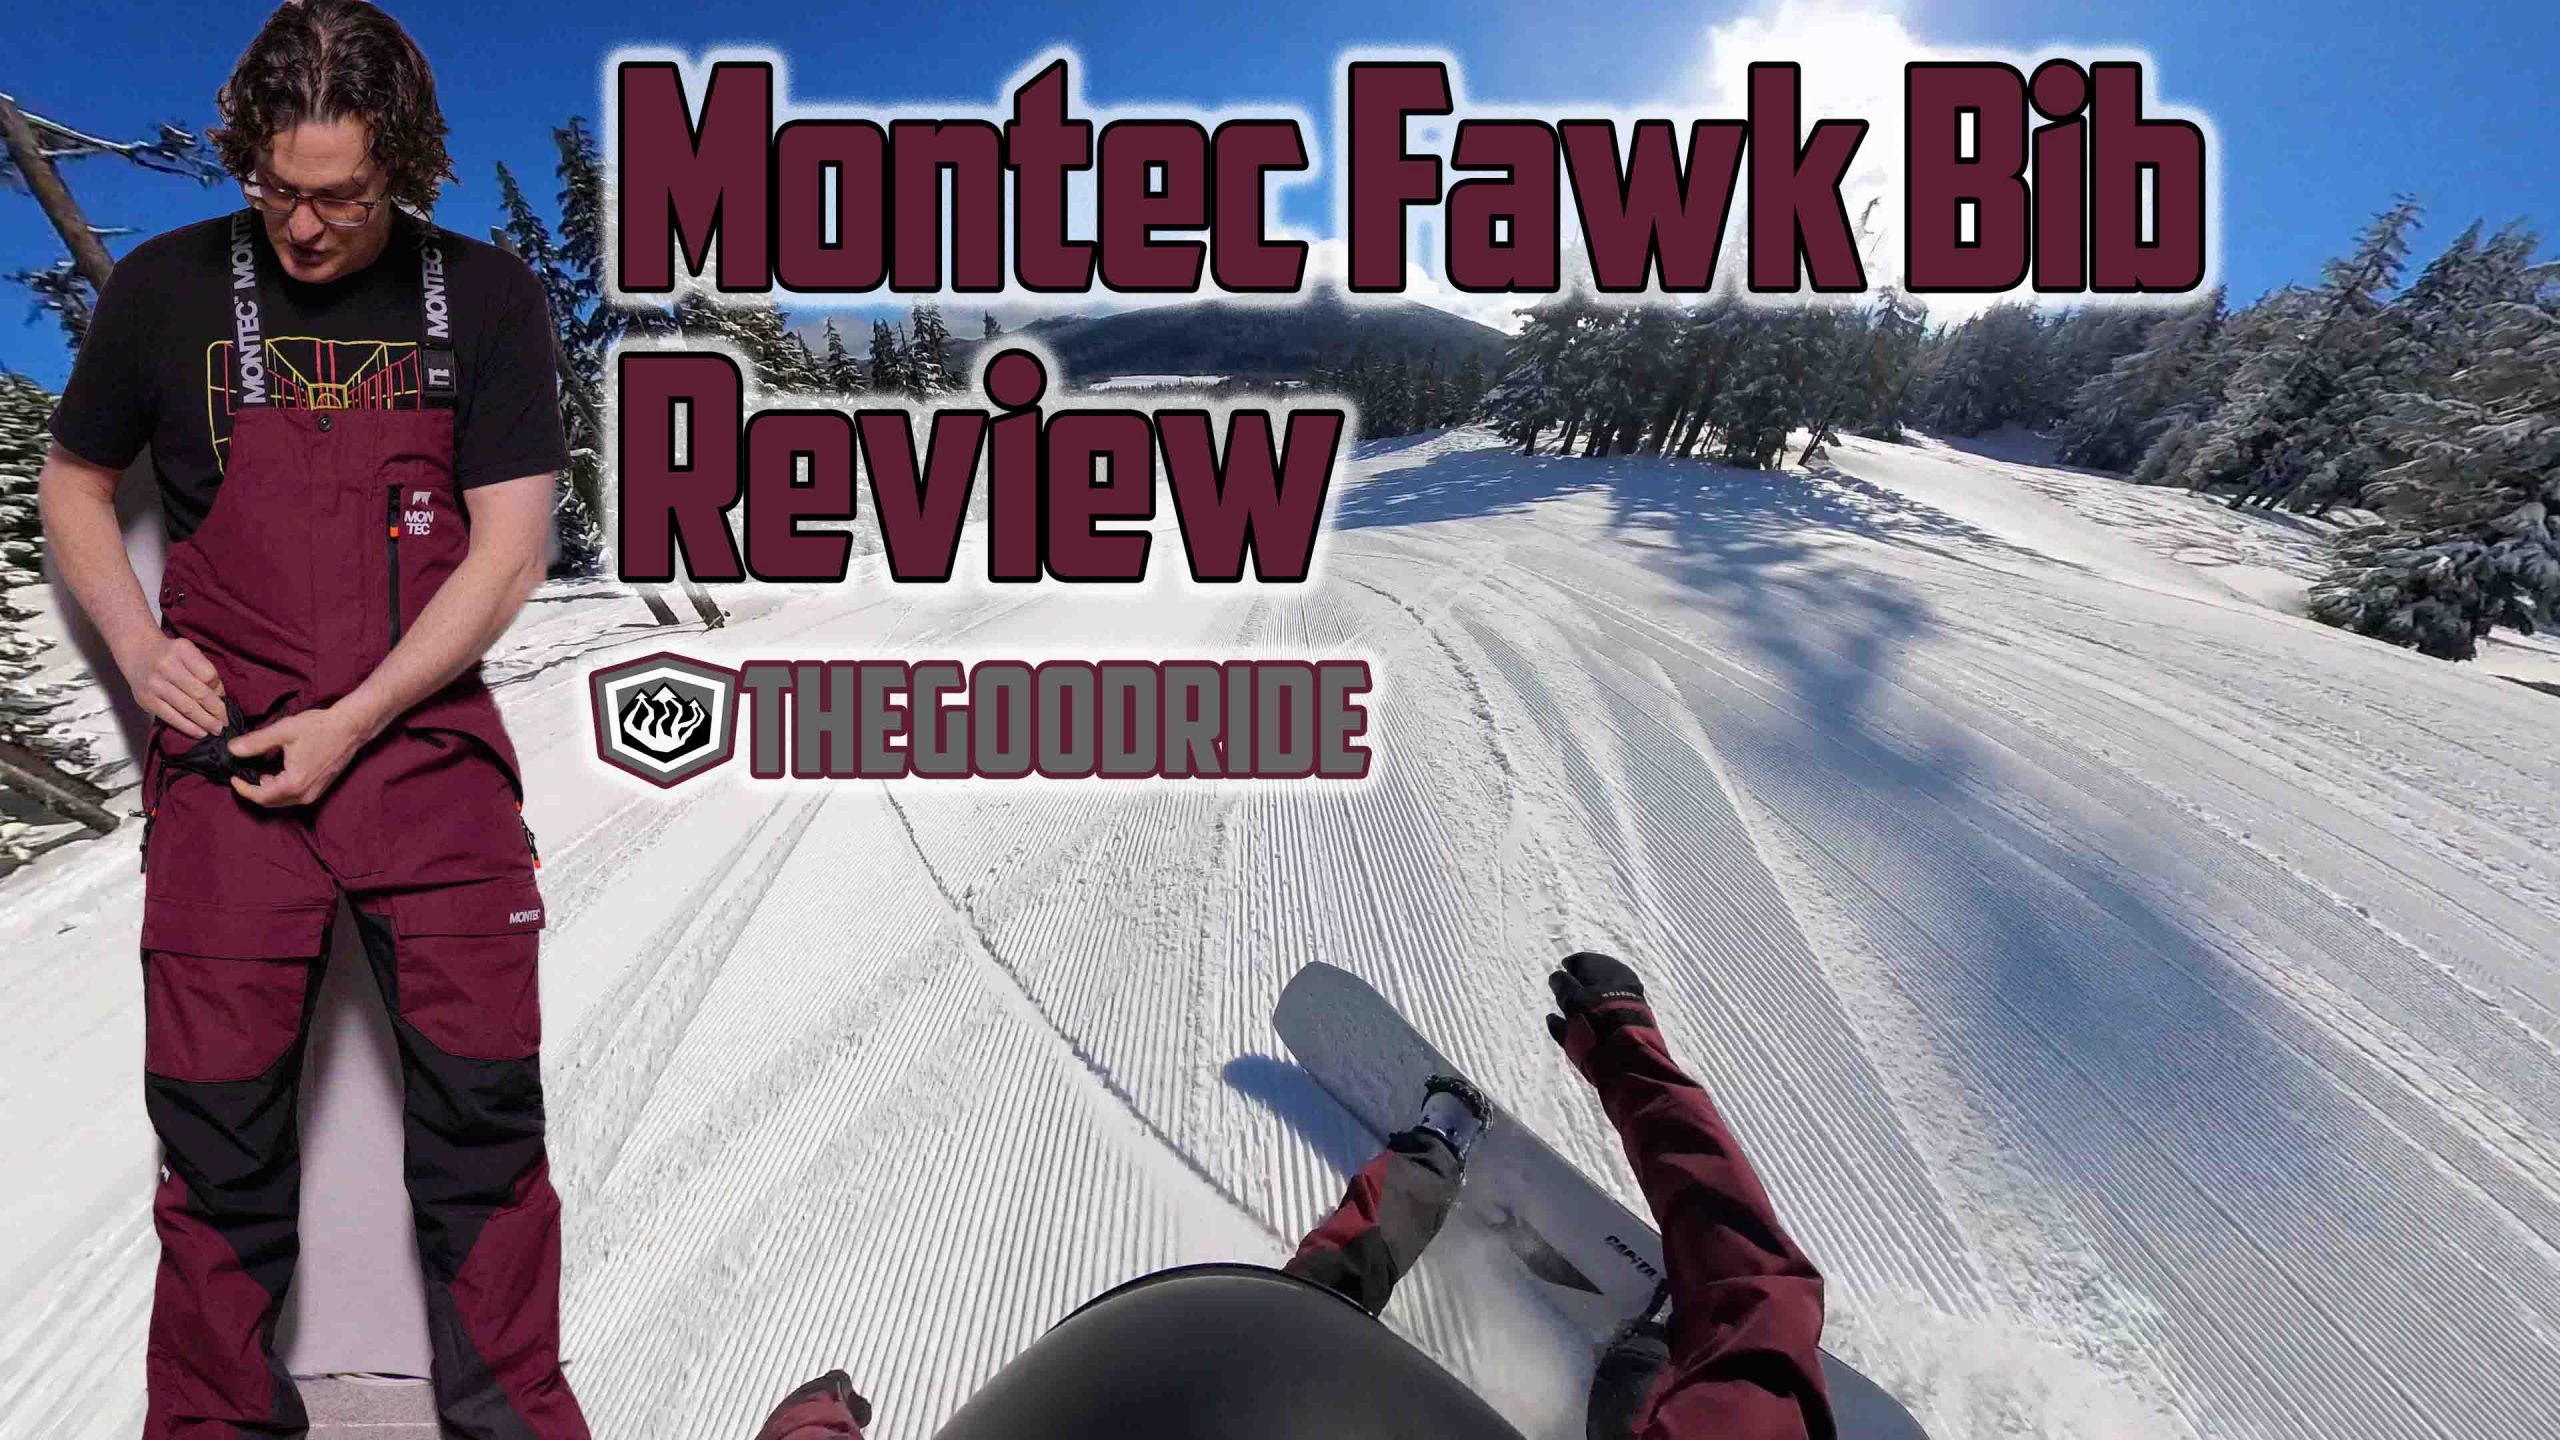 https://thegoodride.com/assets/Montec-Fawk-Bib-Review-The-Good-Ride-scaled.jpg